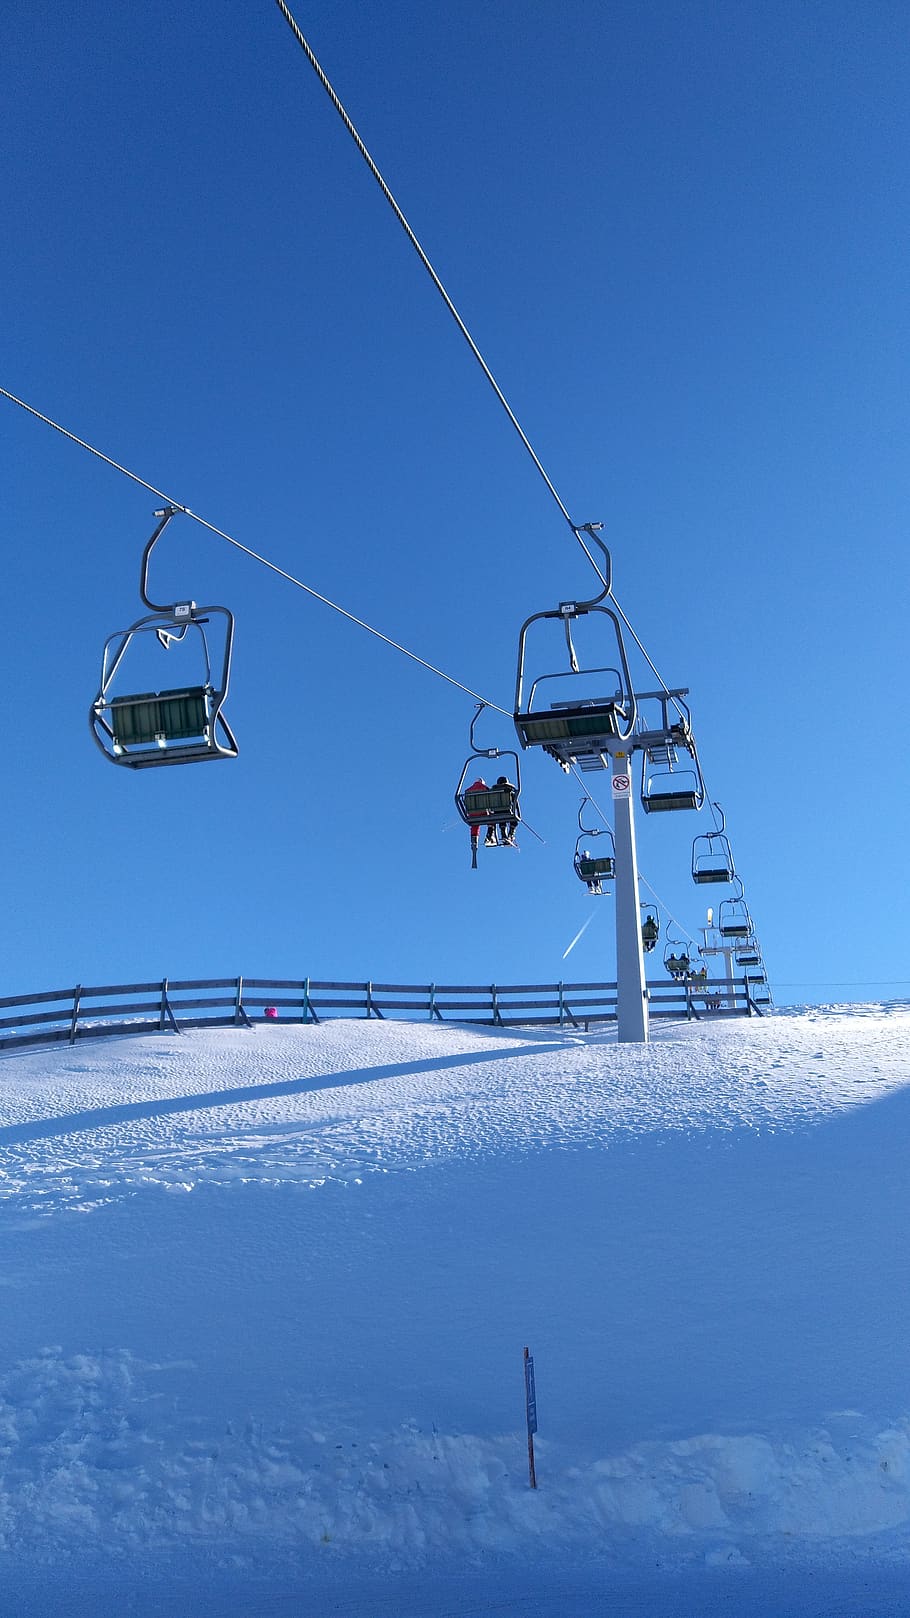 ski-lift-cable-car-winter-snow-lift-skiing.jpg